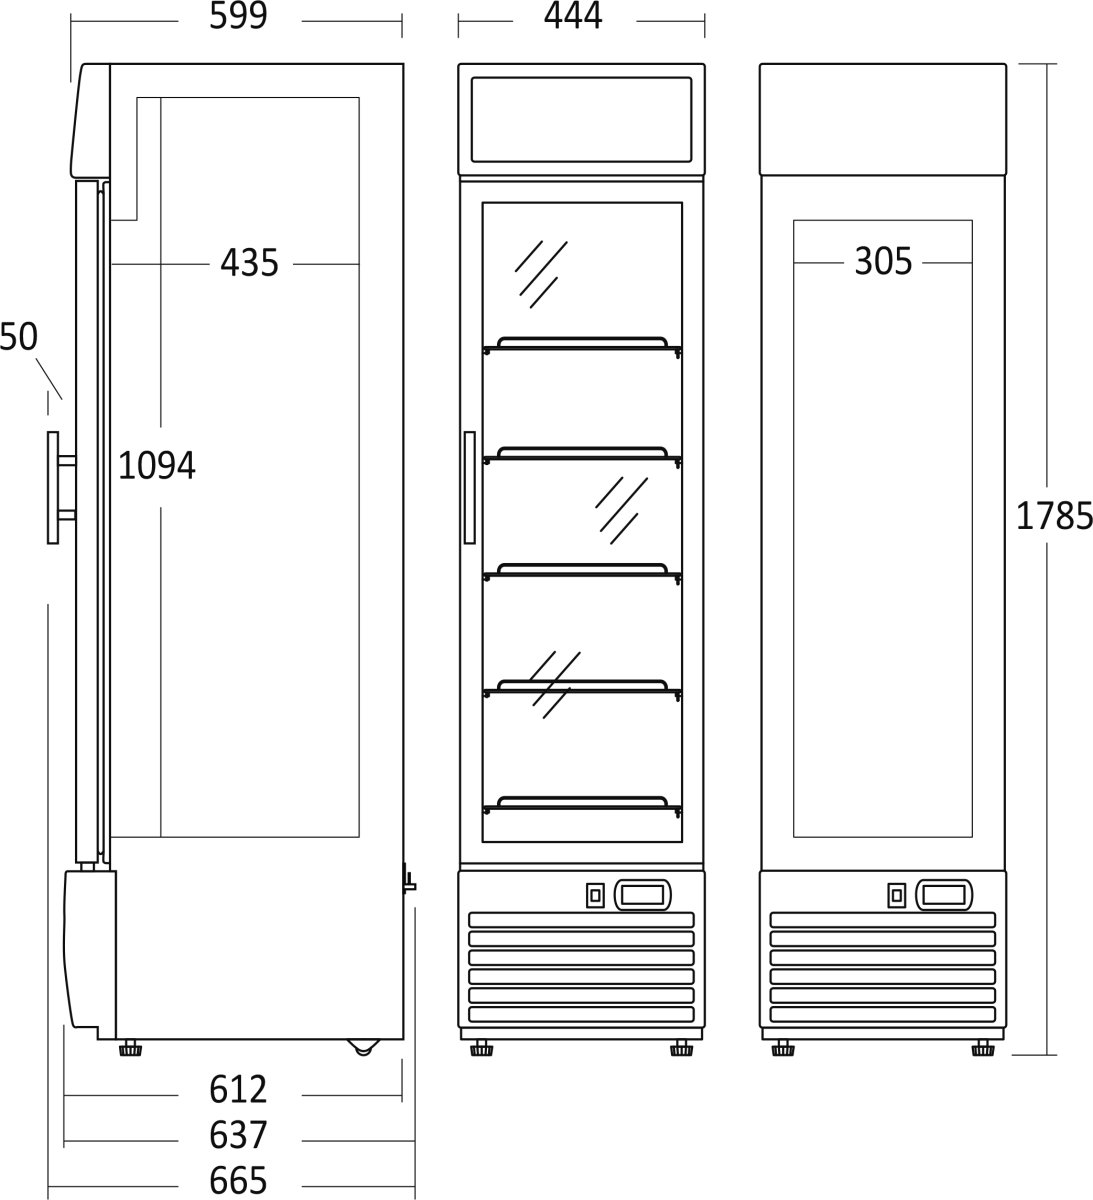 Scandomestic SF 217 BE Displayfryser